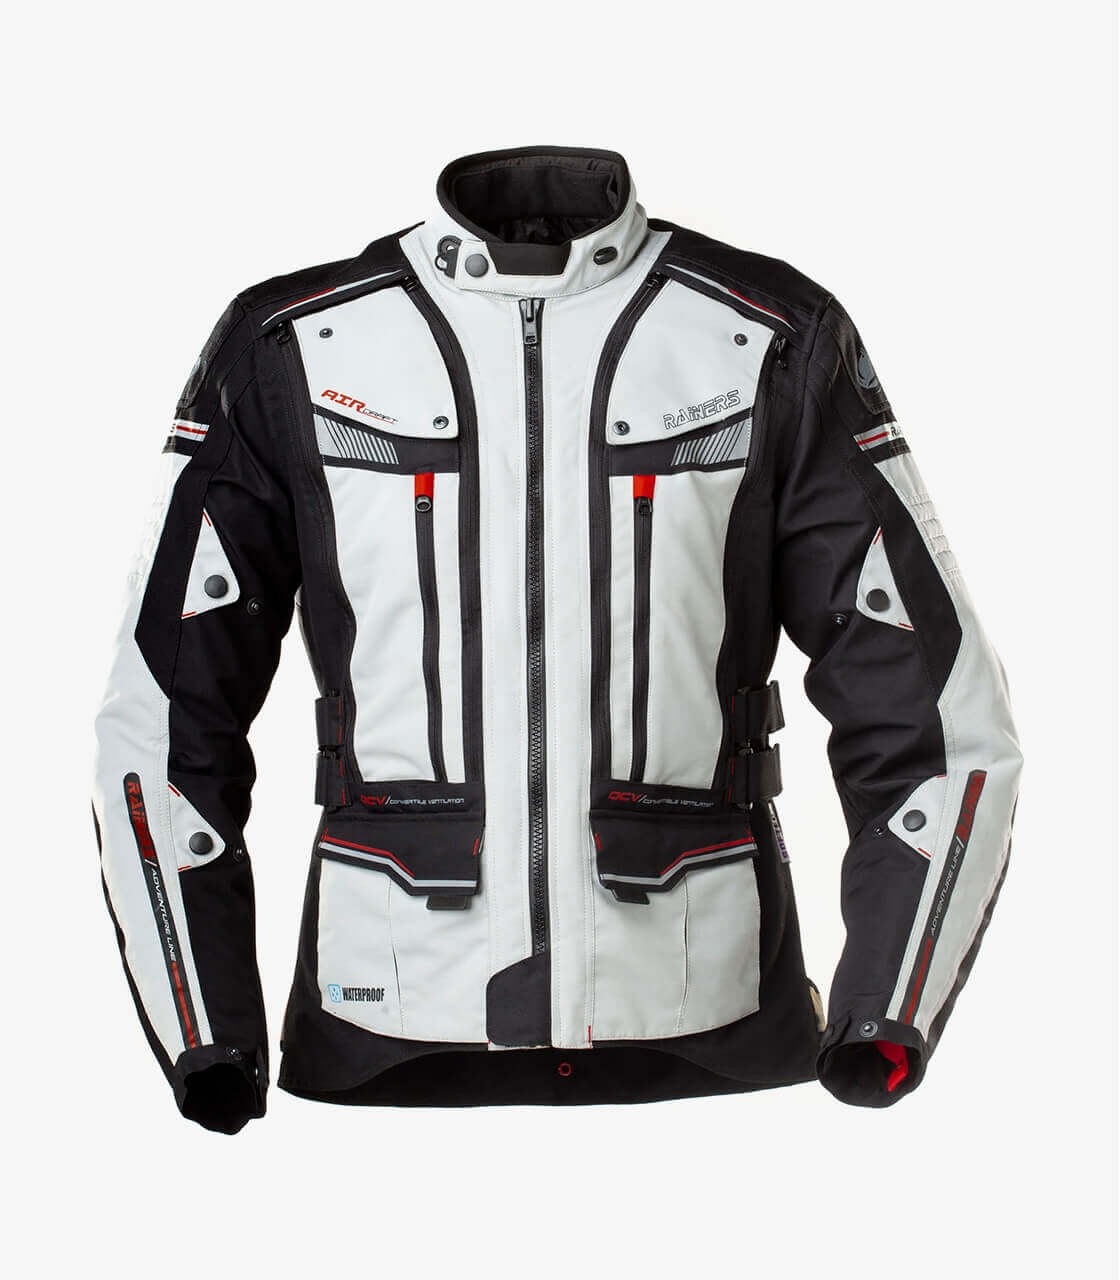 Trivor grey unisex Winter Motorcycle Jacket by Rainers